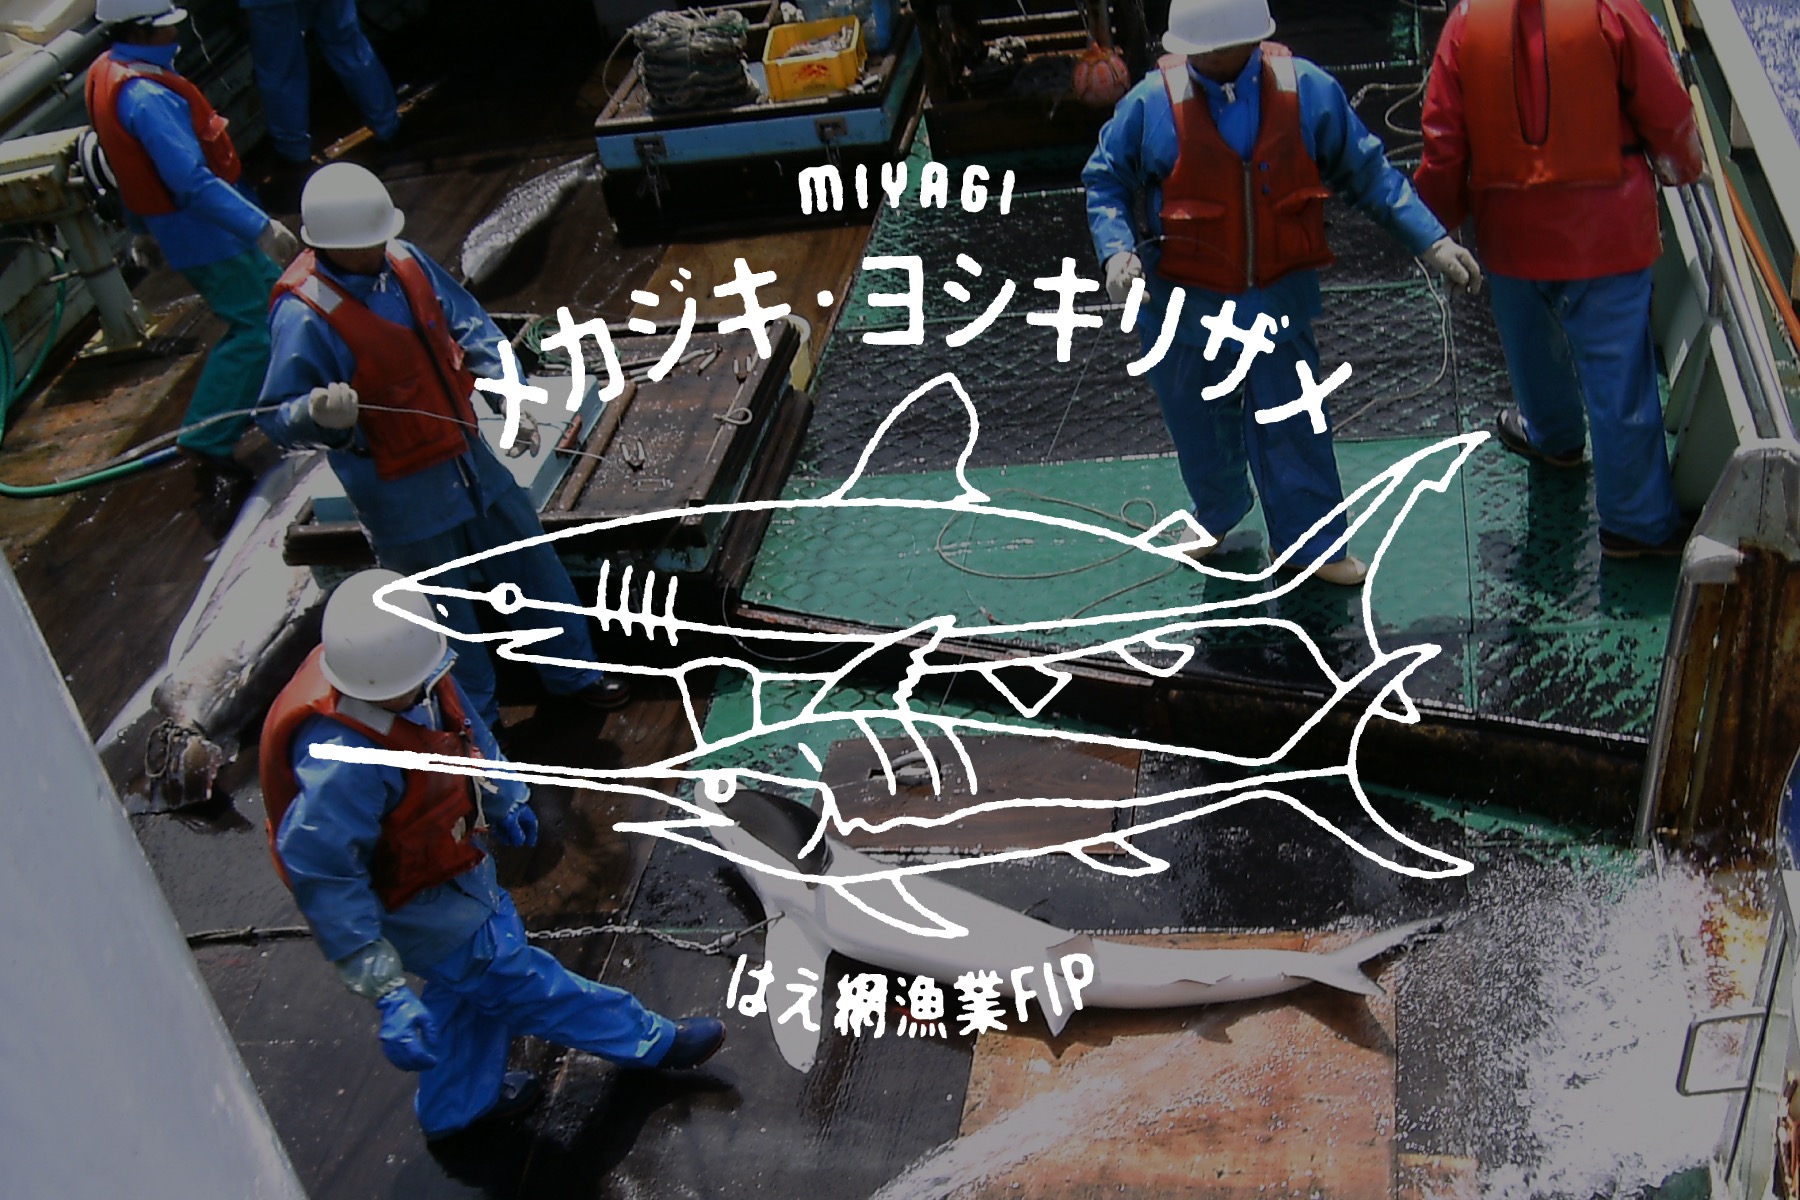 MIYAGI KESENNUMA BLUE SHARK & SWORDFISH FISHERY IMPROVEMENT PROJECT (FIP)